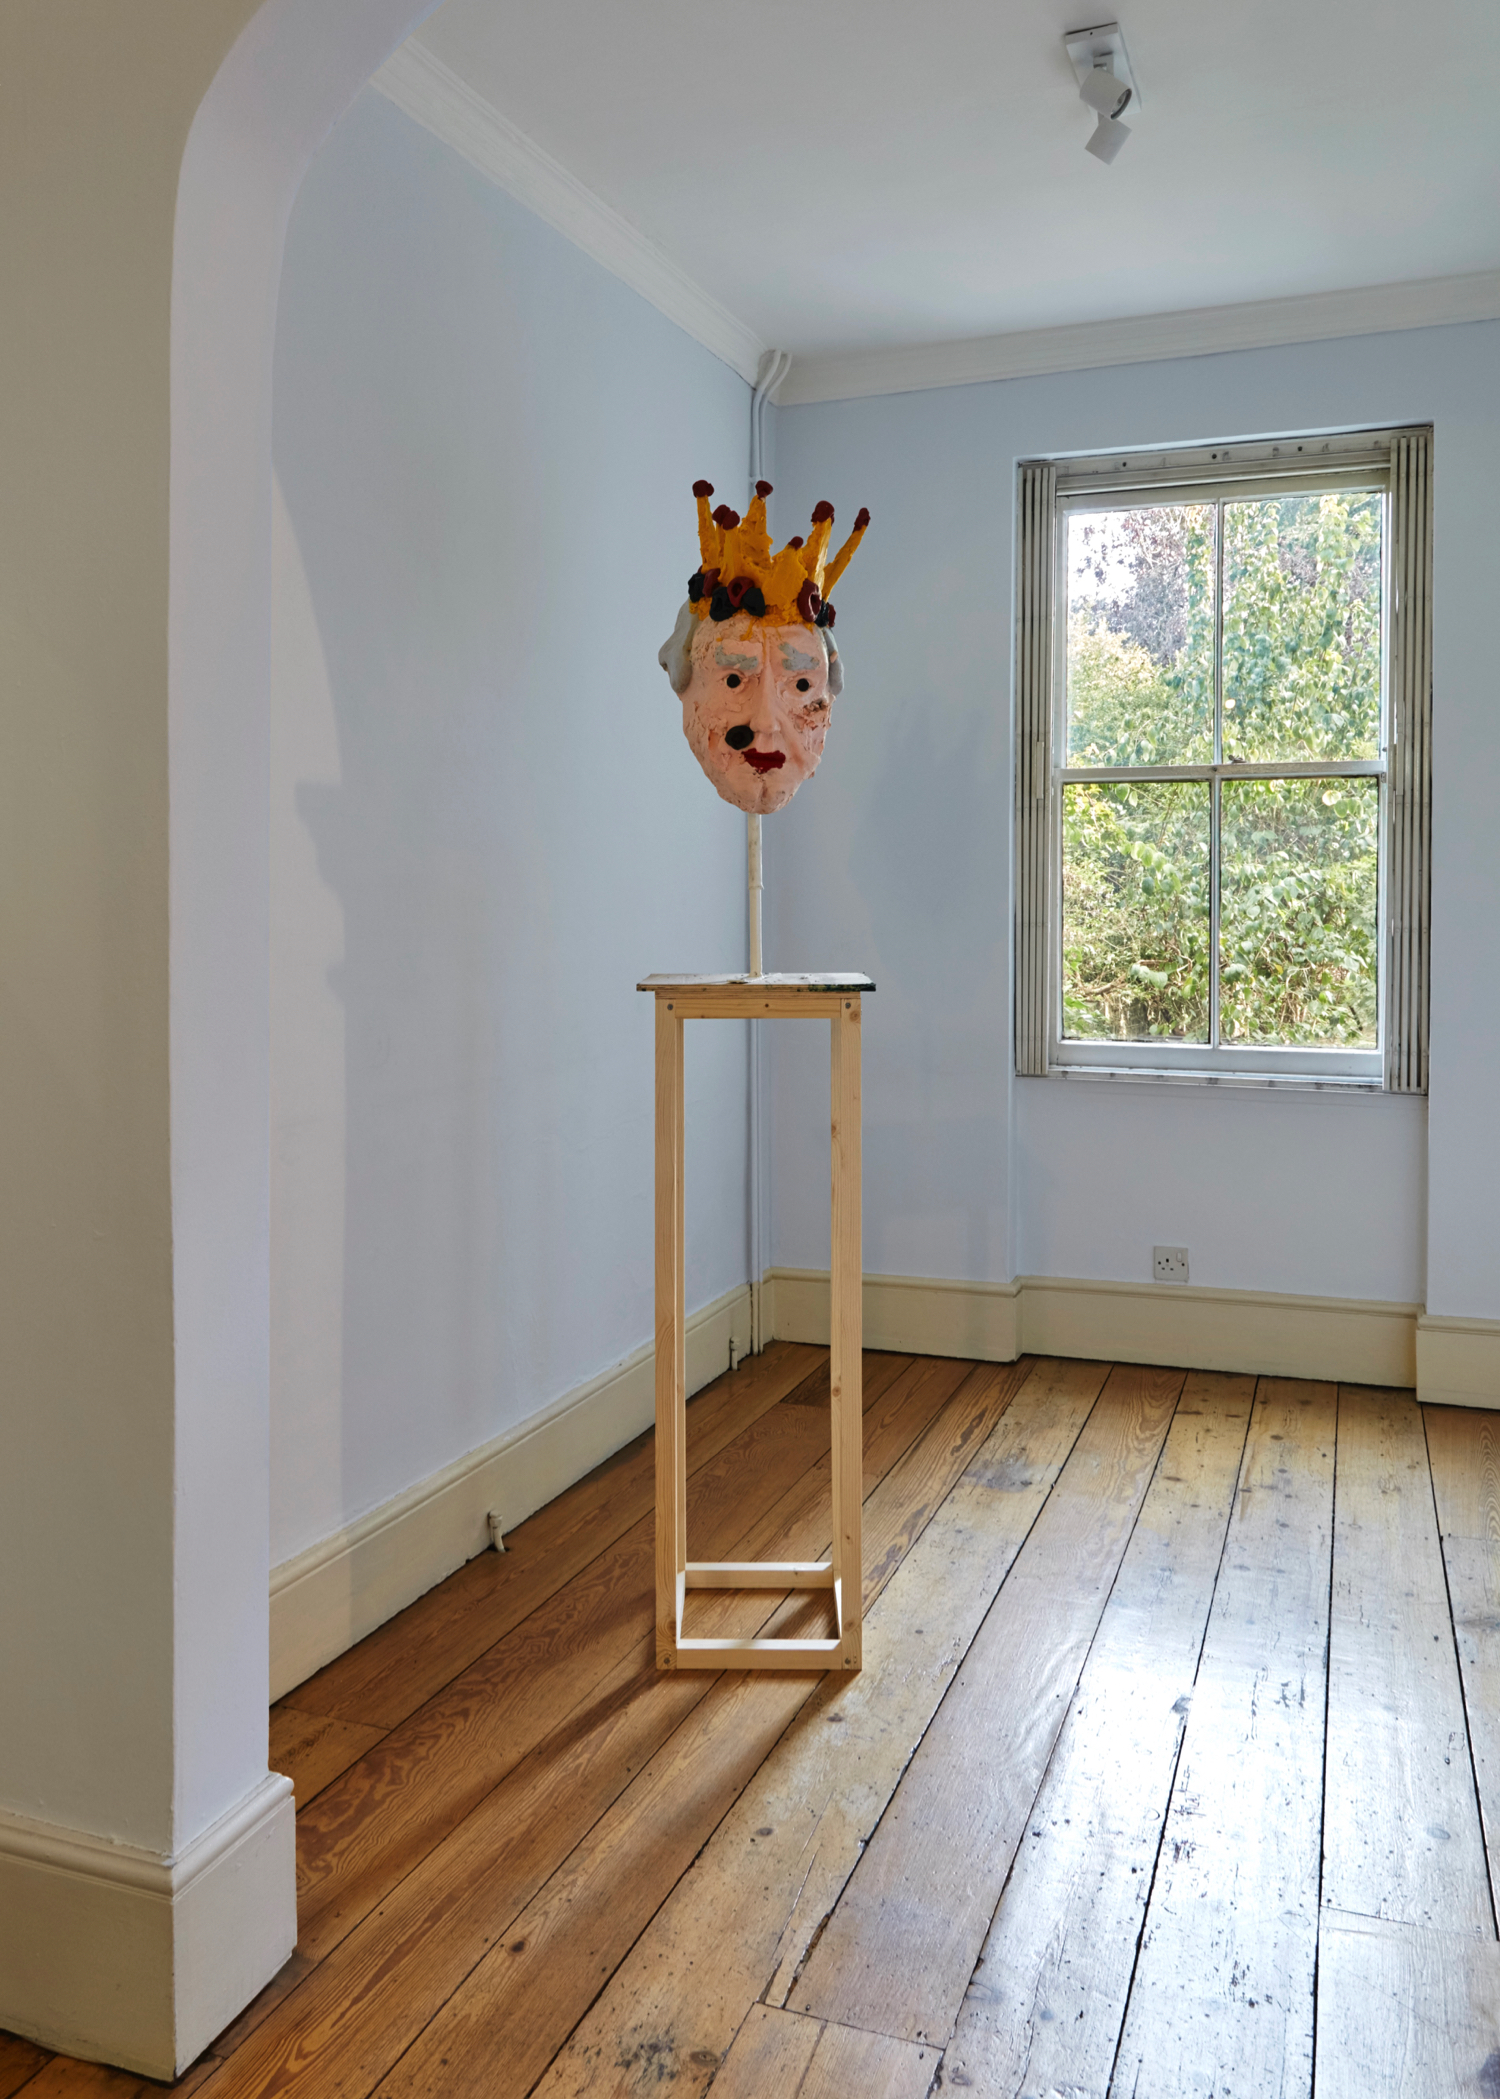 Jamie Fitzpatrick, Head, 2019, wax, scrim and polyurethane foam, 56 x 36 x 31 cm. Courtesy of the artist and Tanya Leighton, Berlin